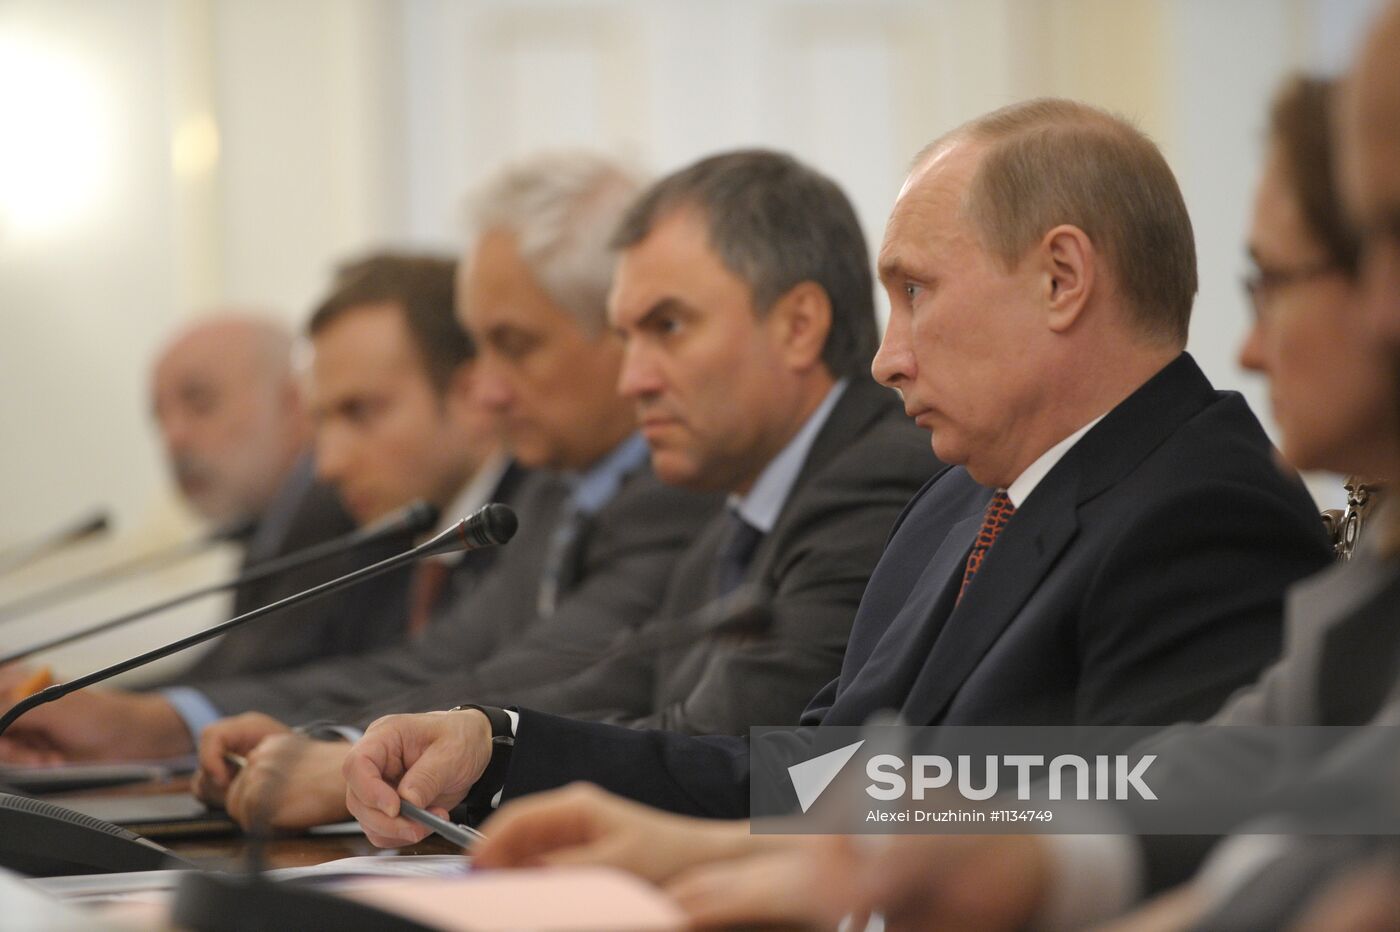 Vladimir Putin meets with business community